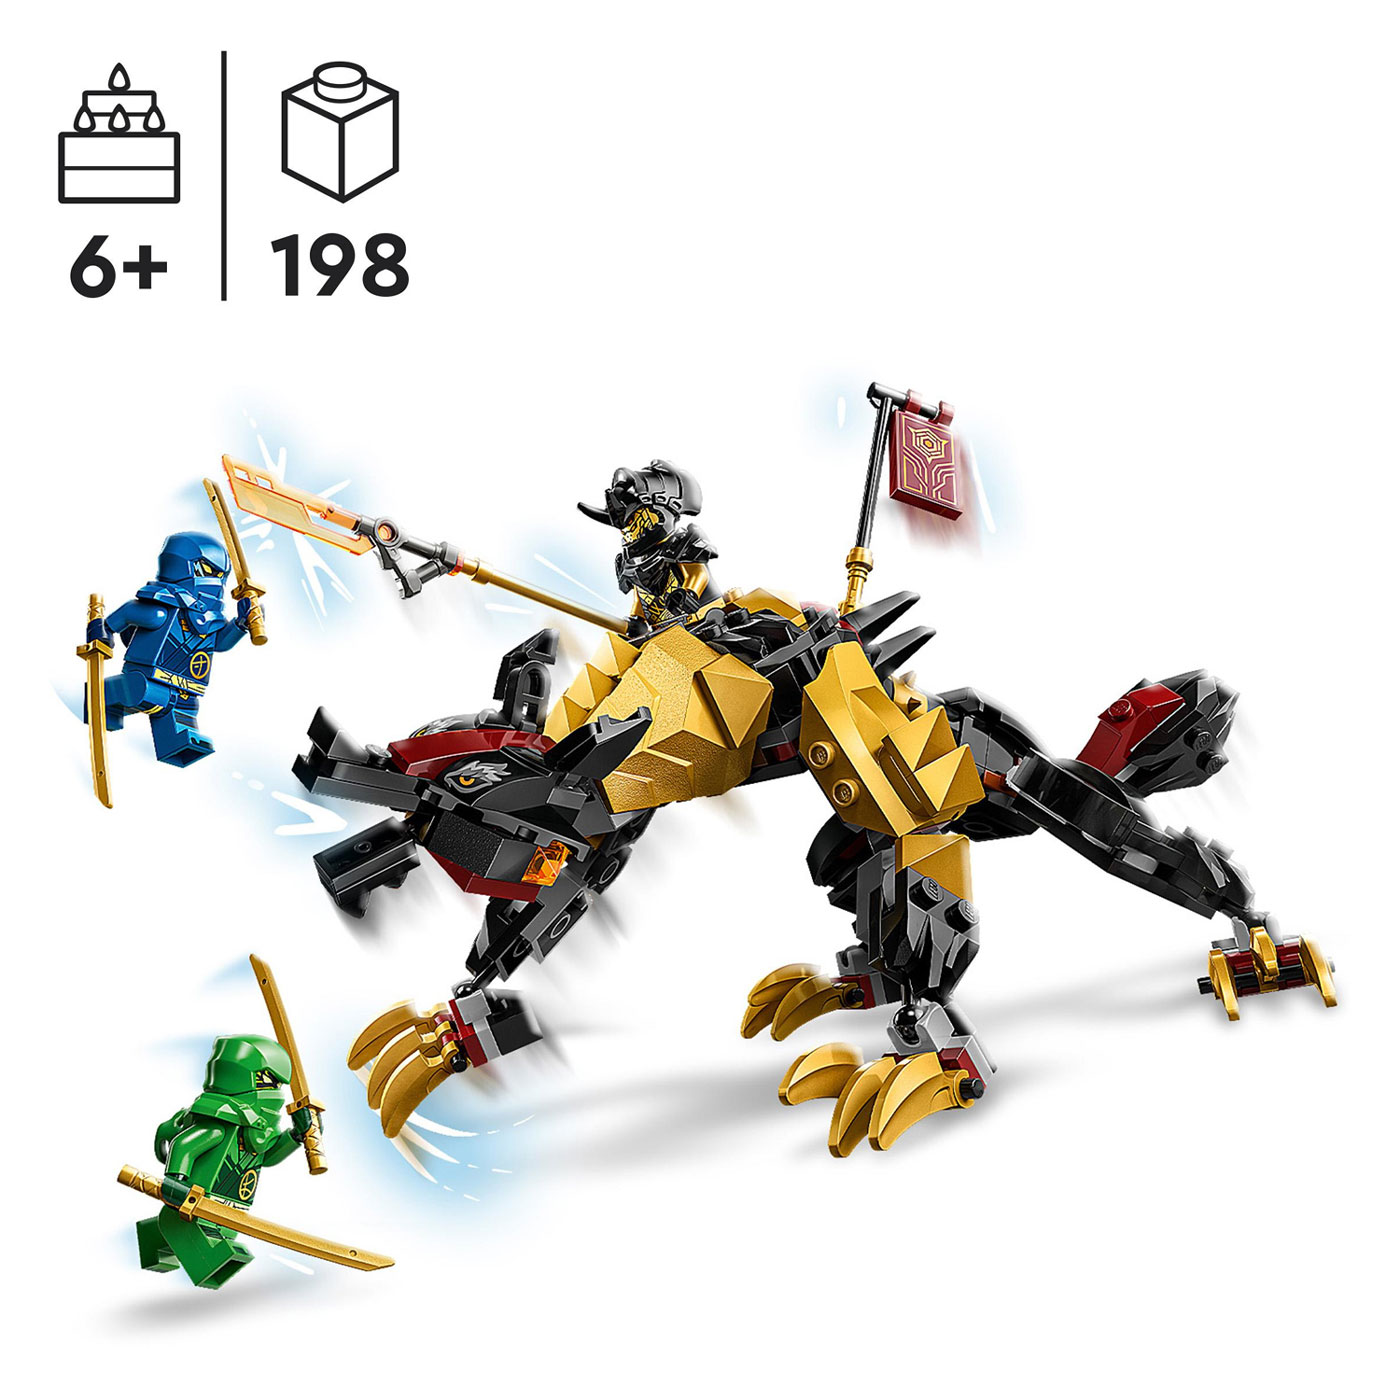 71790 LEGO Ninjago Imperium Drachenjägerhund